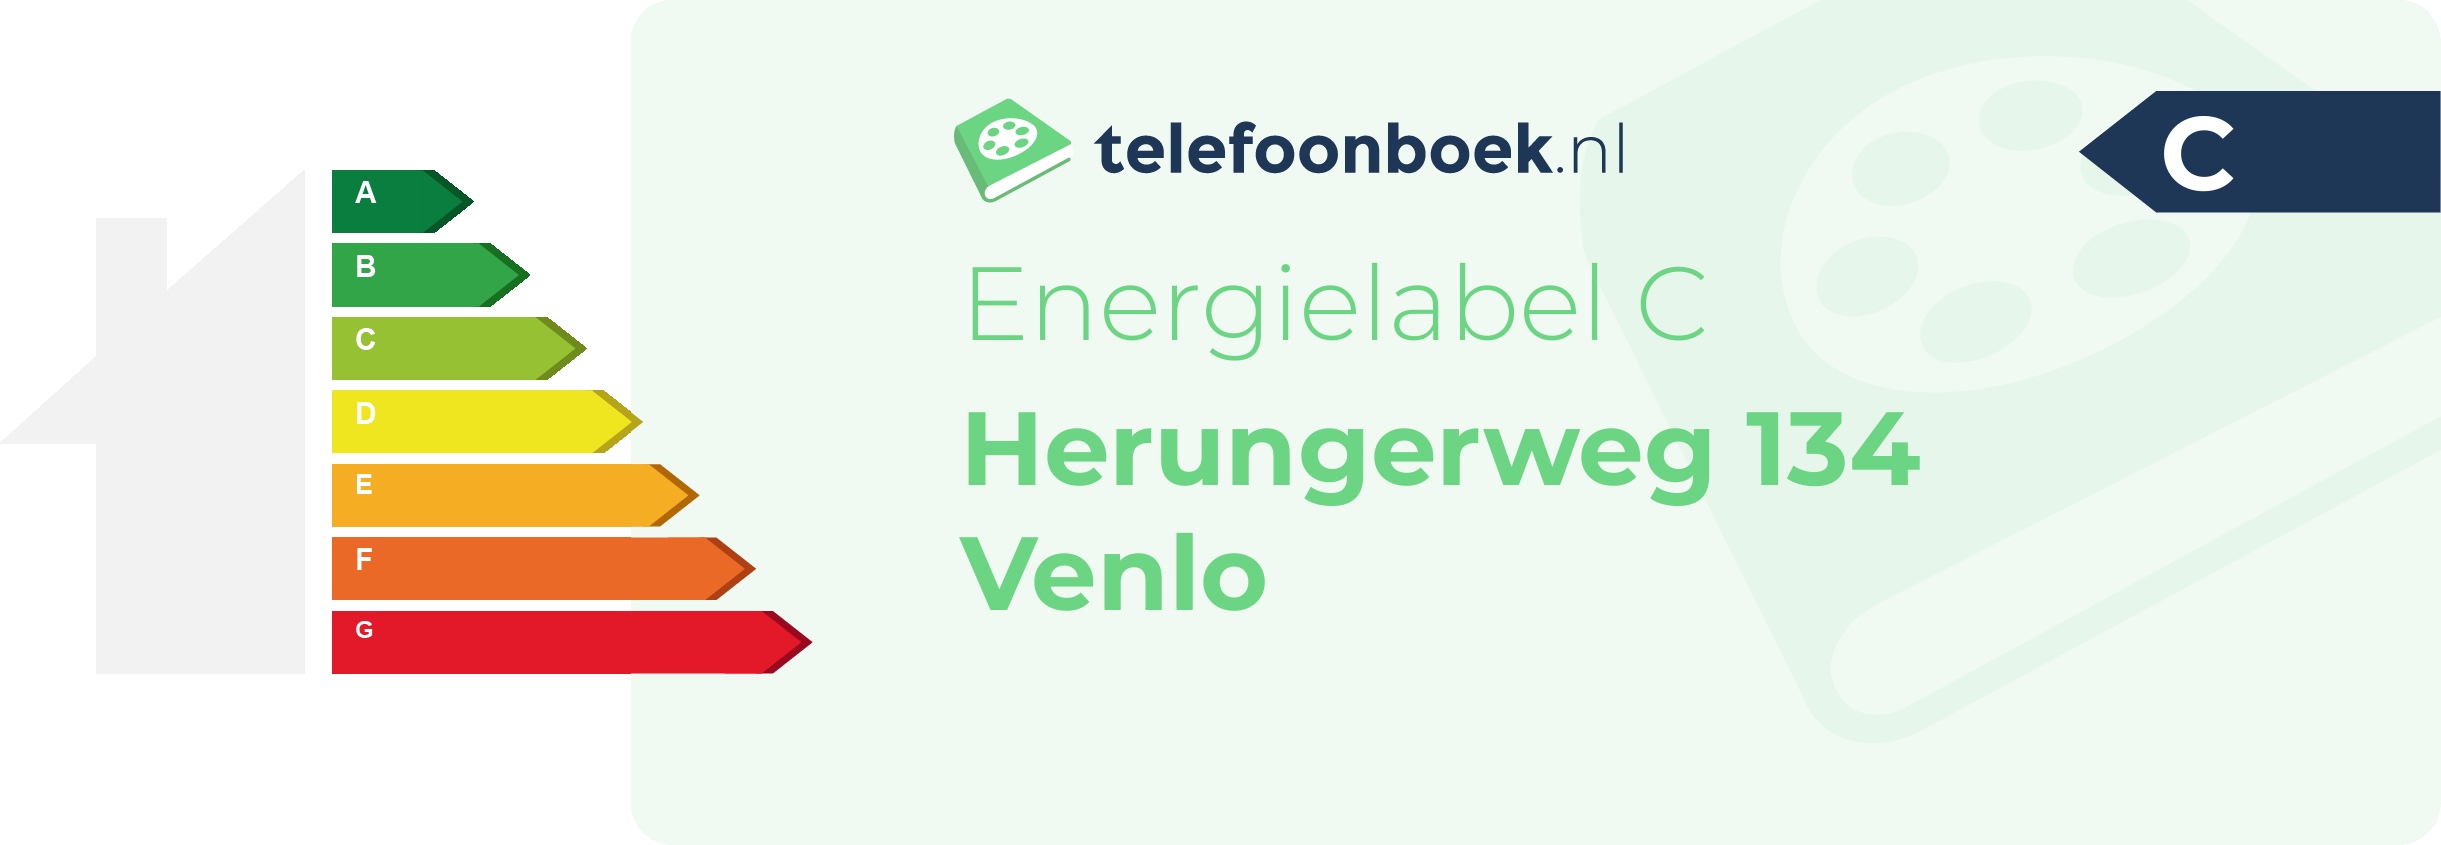 Energielabel Herungerweg 134 Venlo